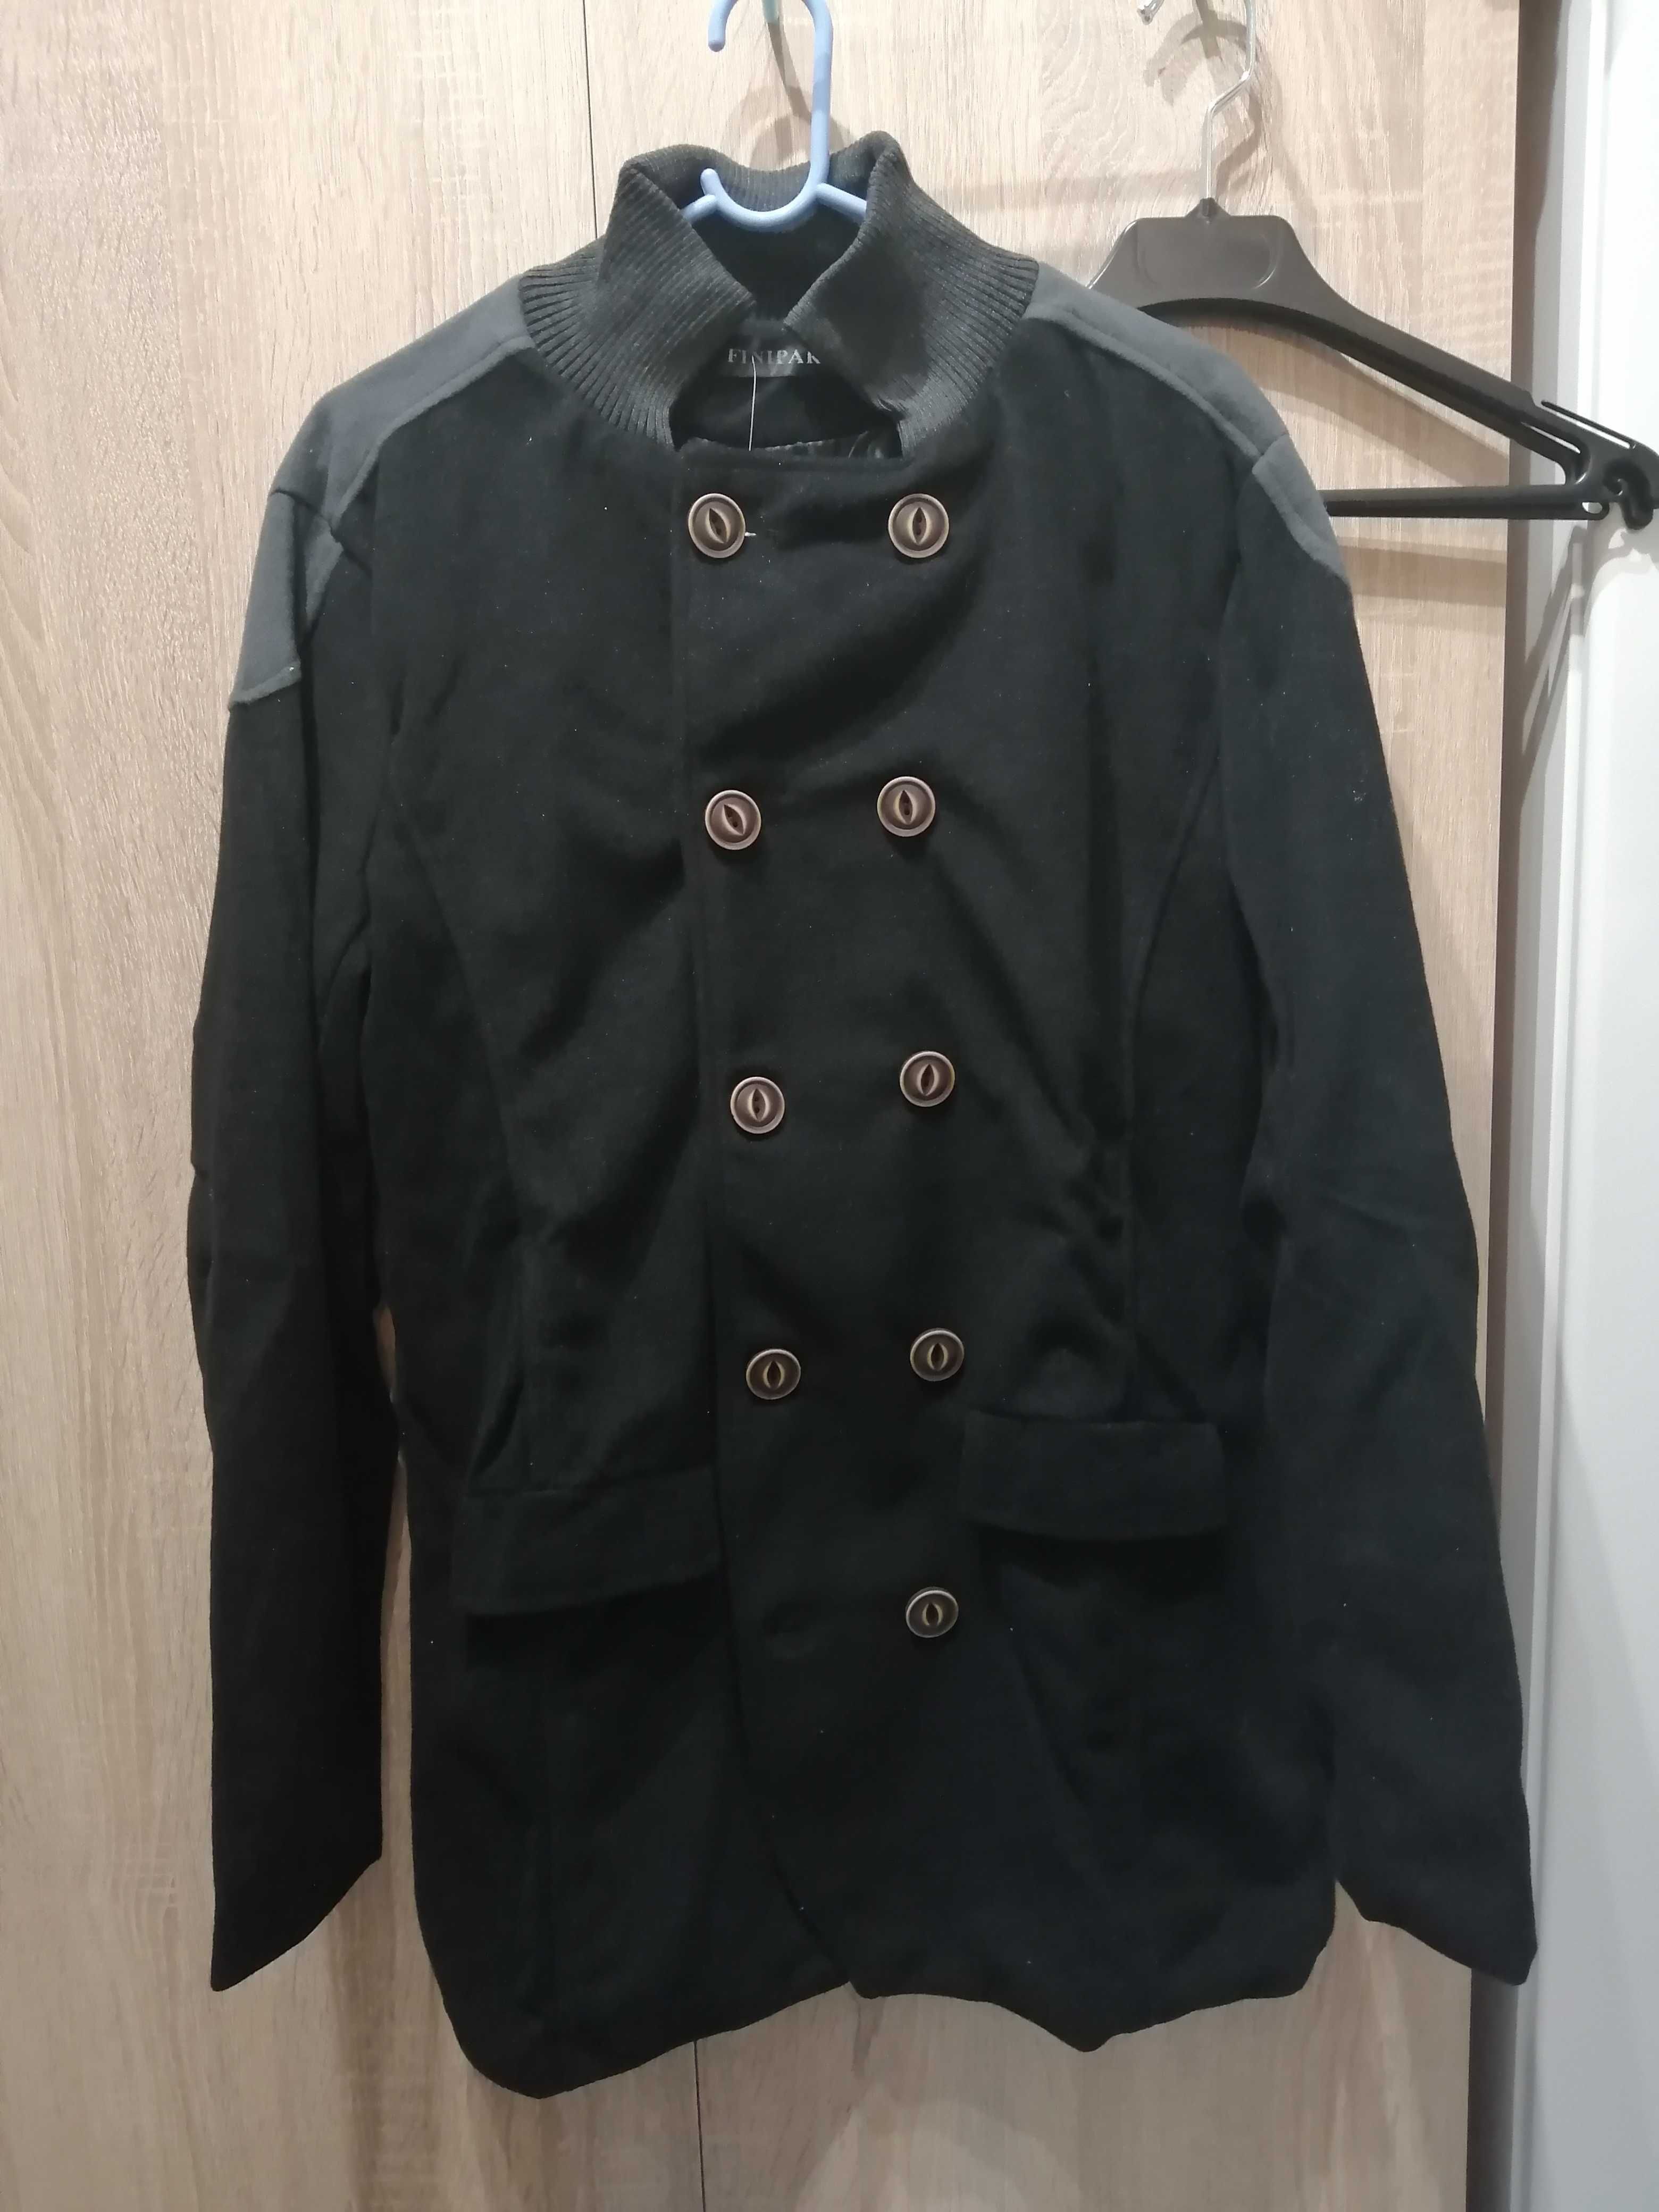 casaco de inverno de homem estilo militar novo